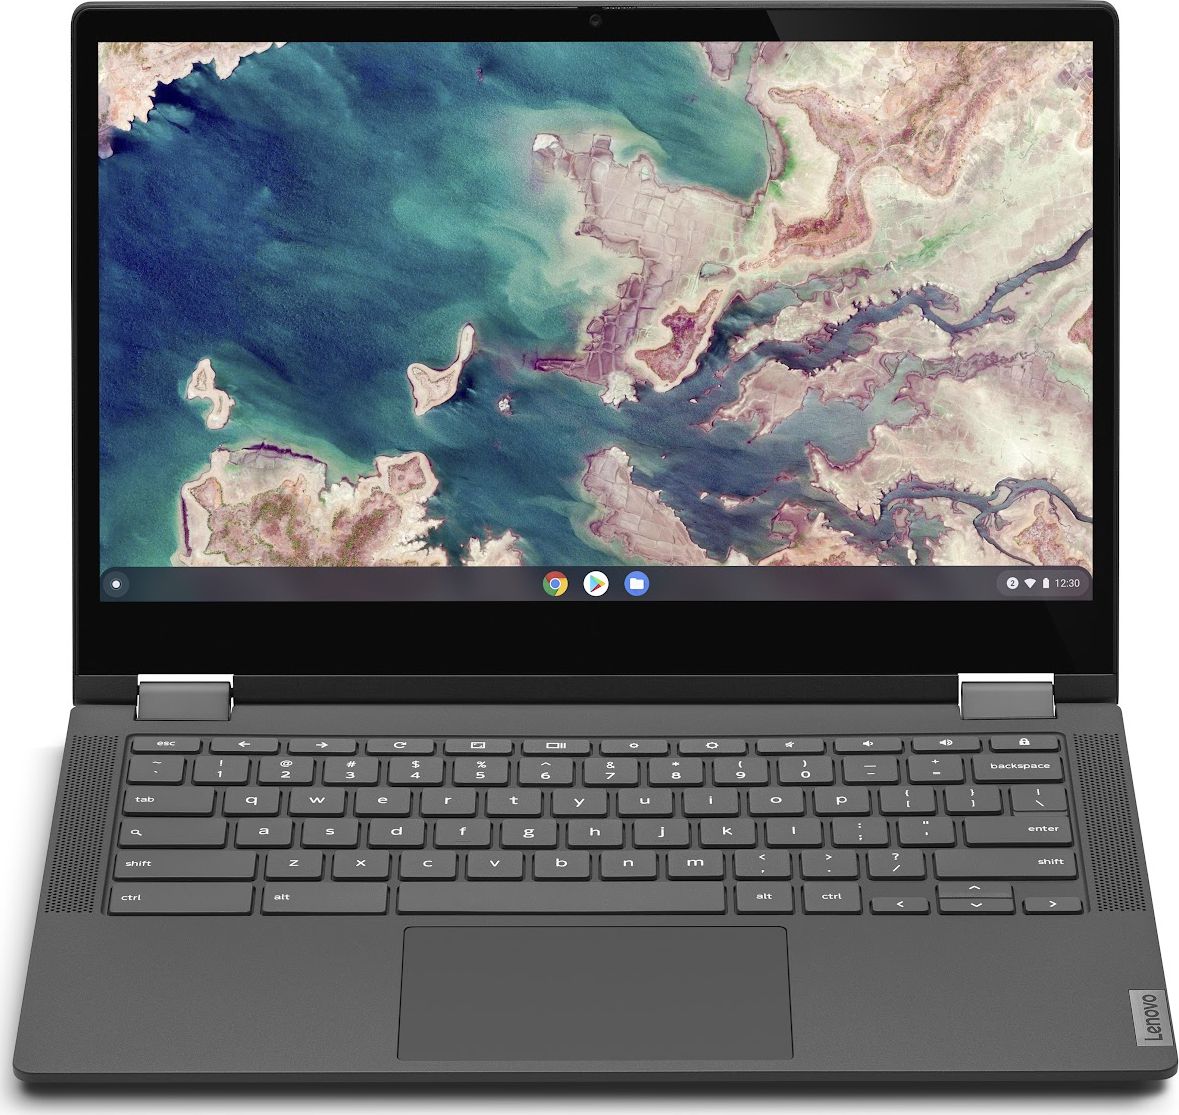 Laptop Lenovo IdeaPad Flex 5